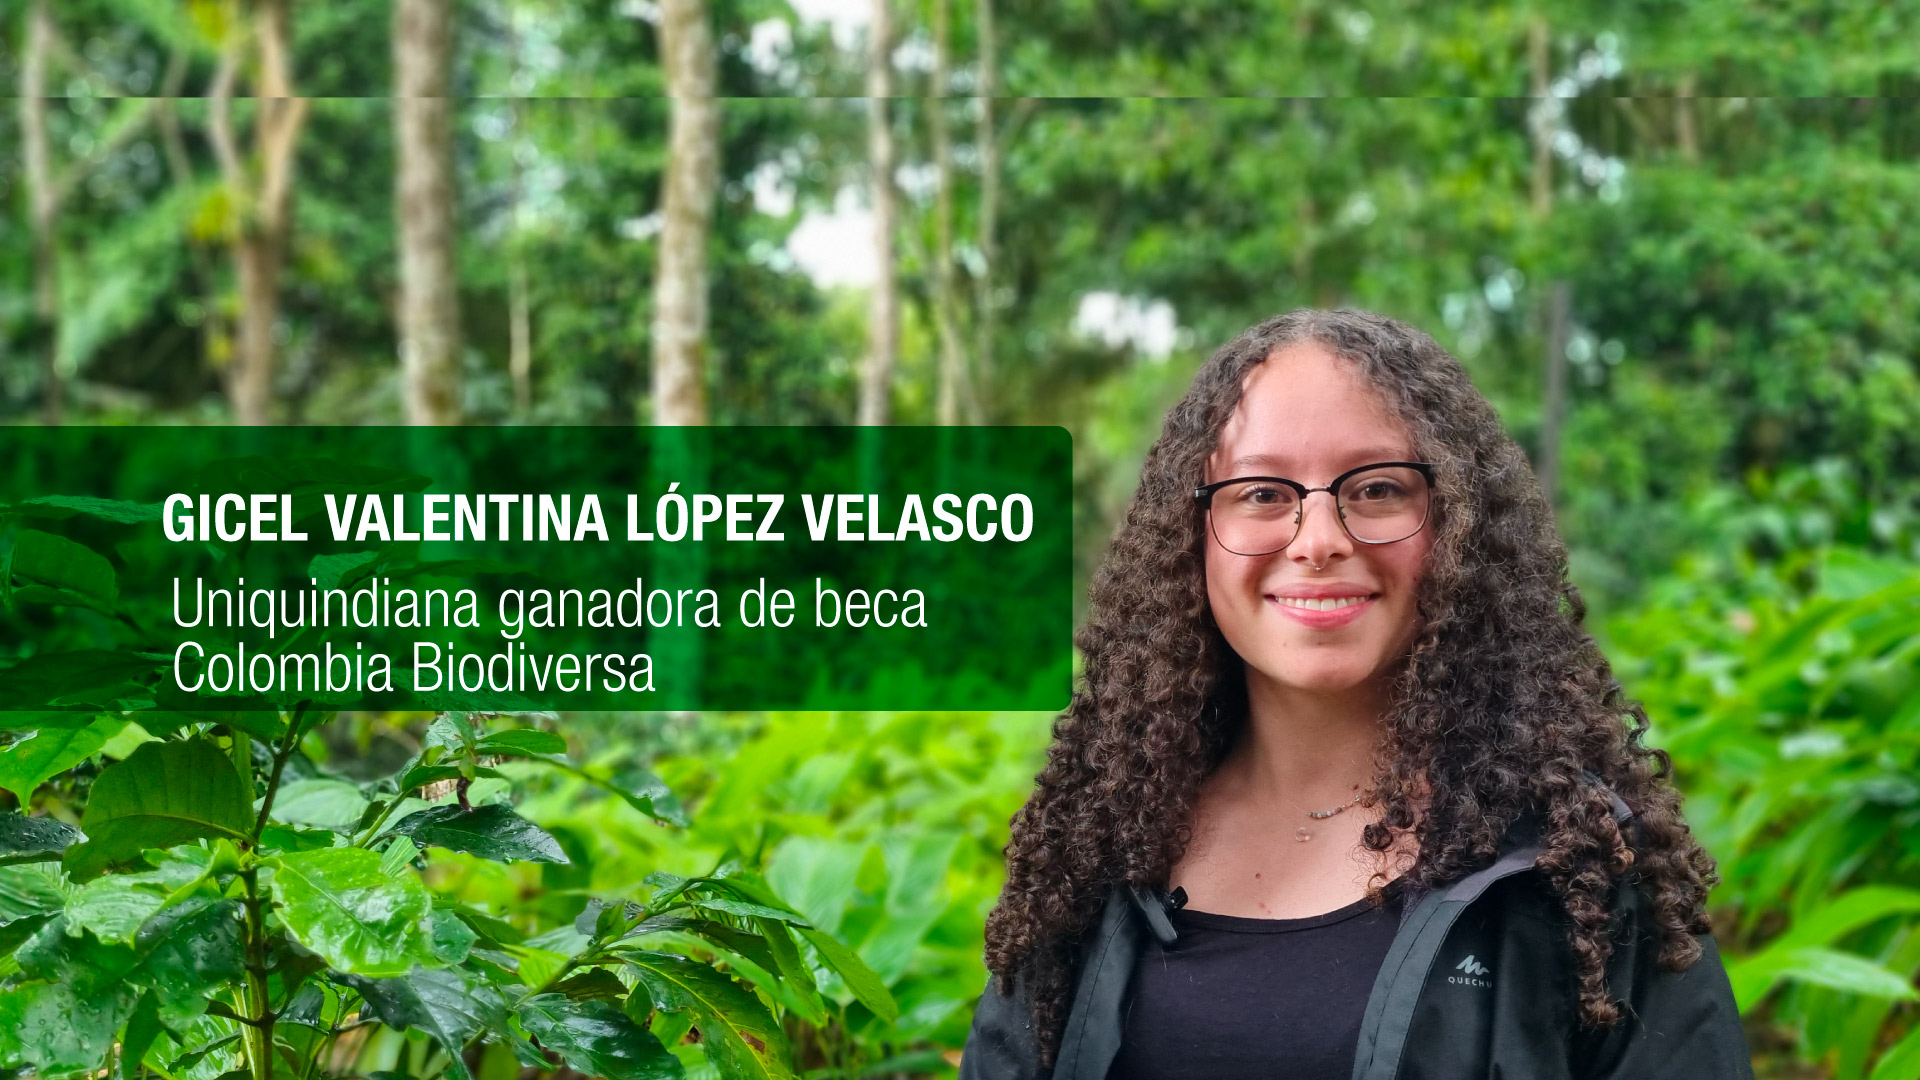 Uniquindiana es ganadora de beca Colombia Biodiversa